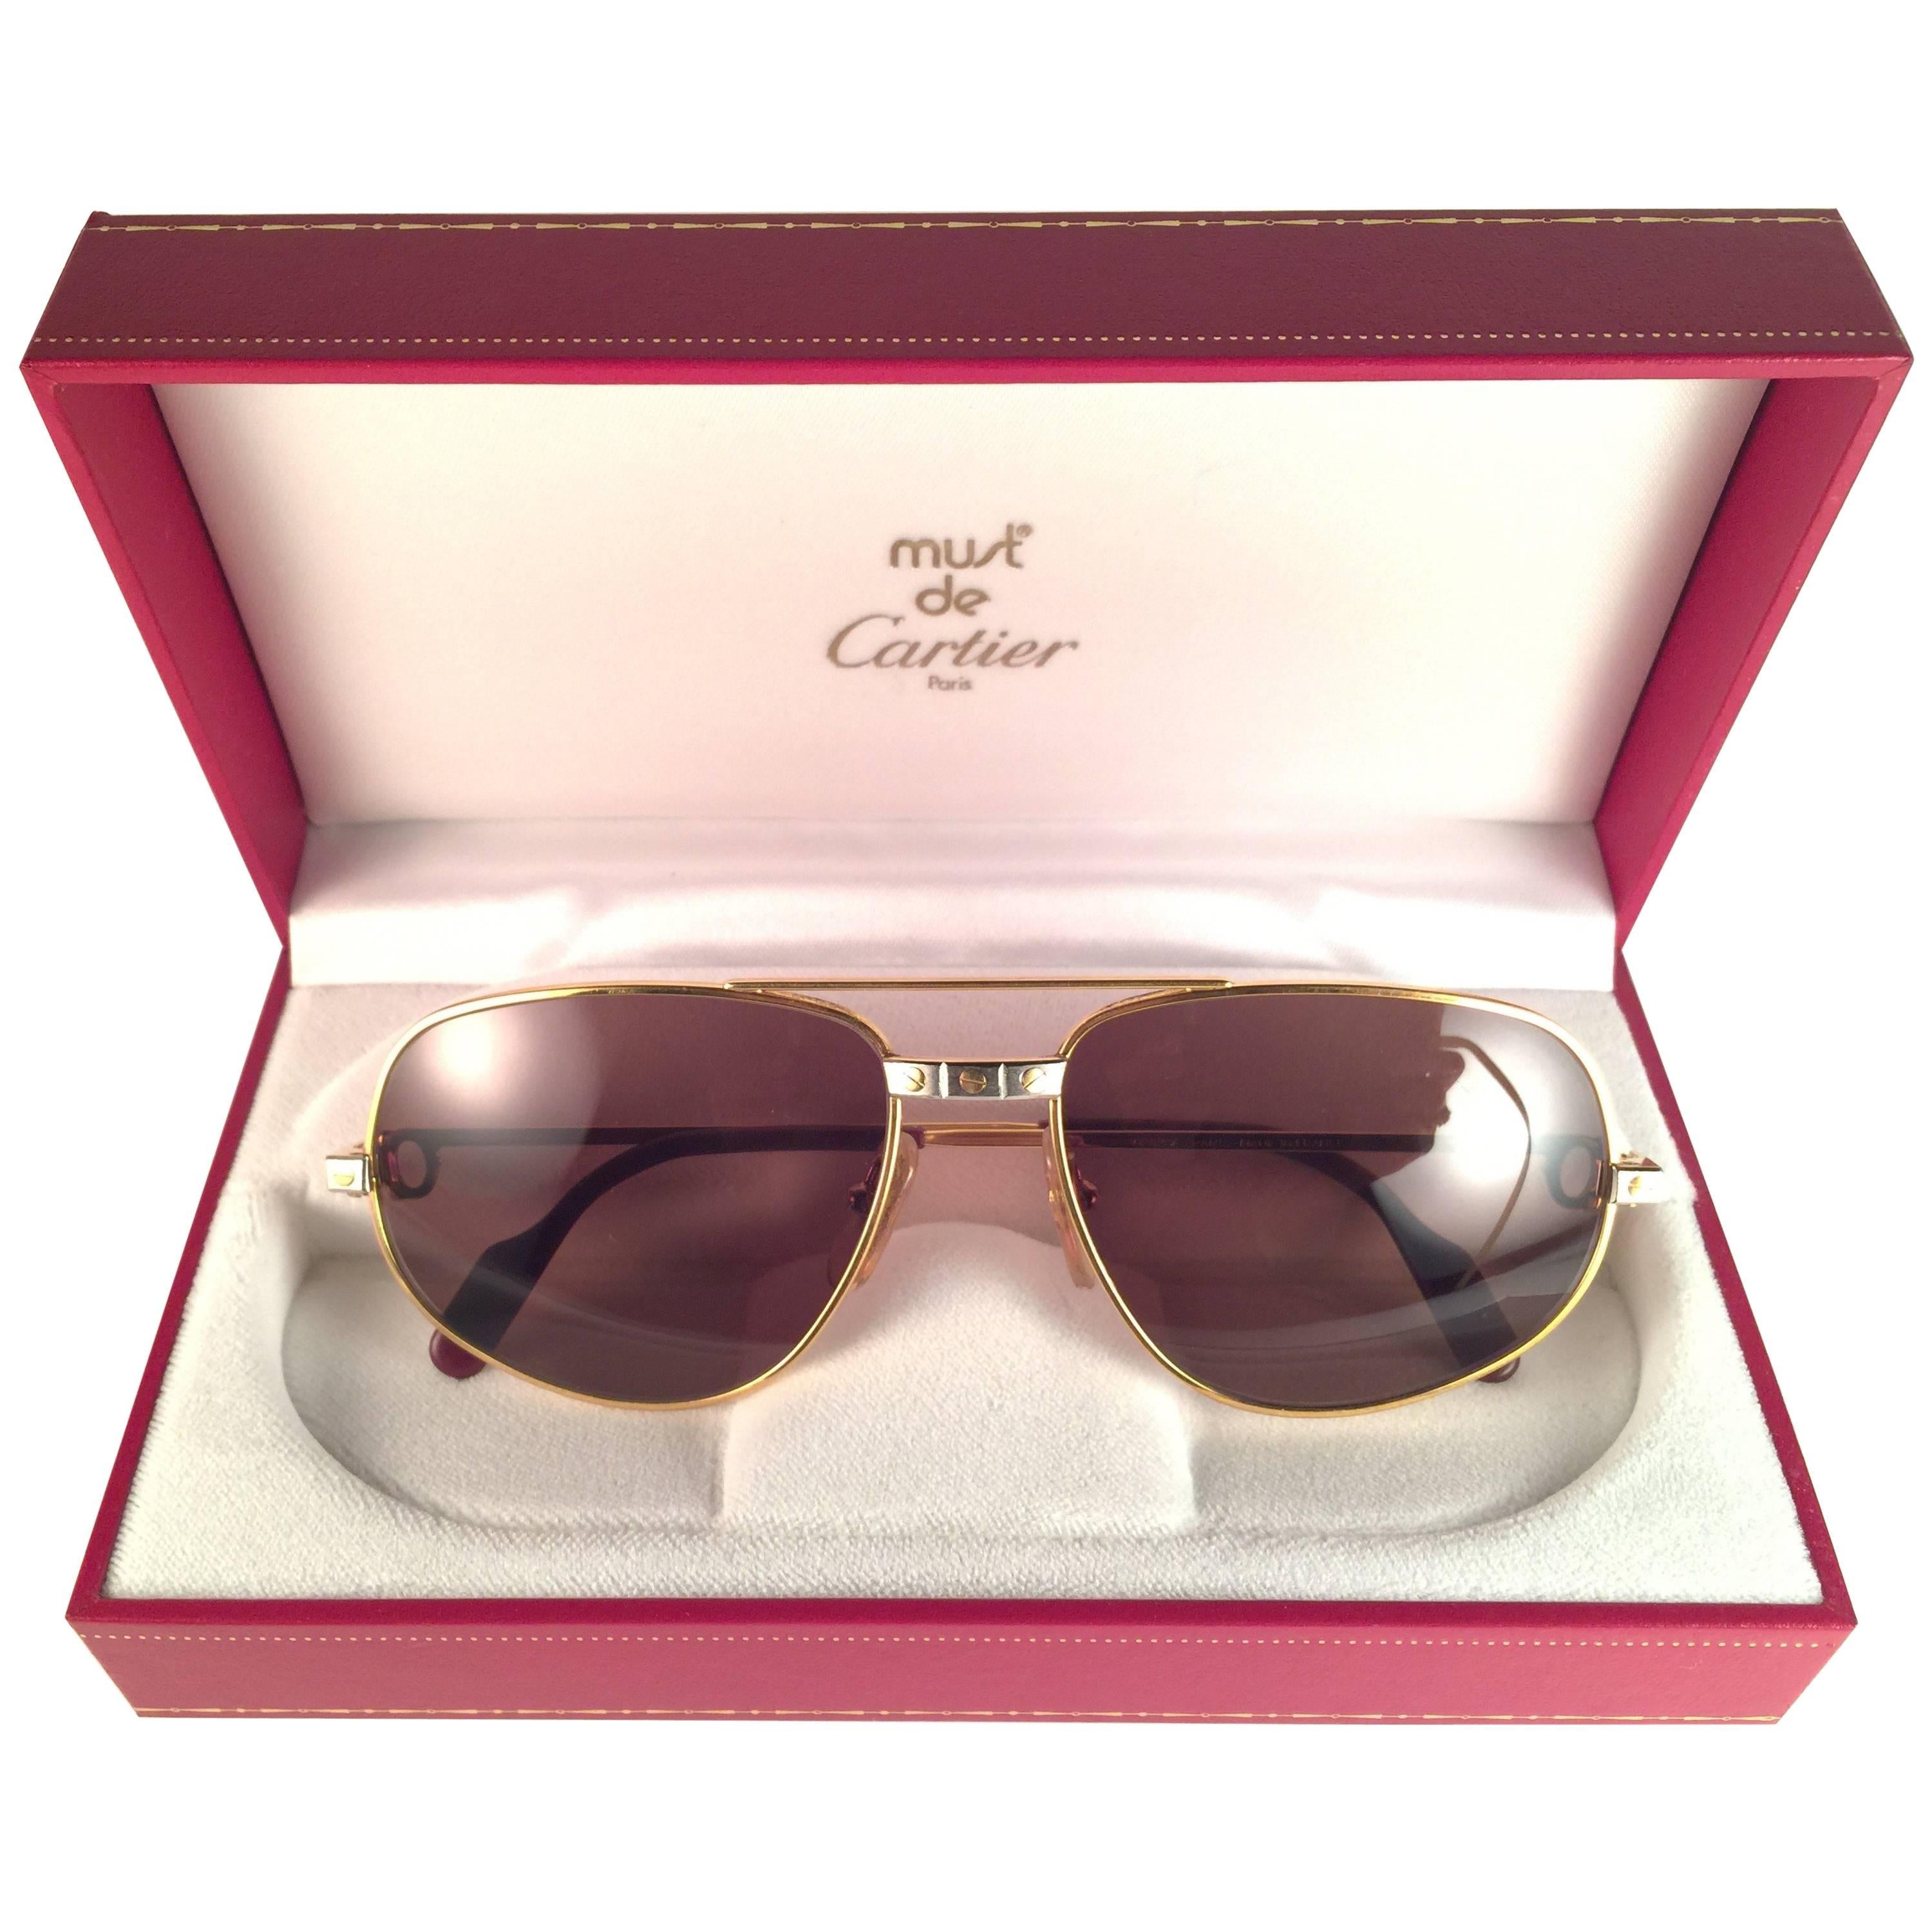 New Vintage Cartier Romance Santos 54MM France 18k Gold Plated Sunglasses